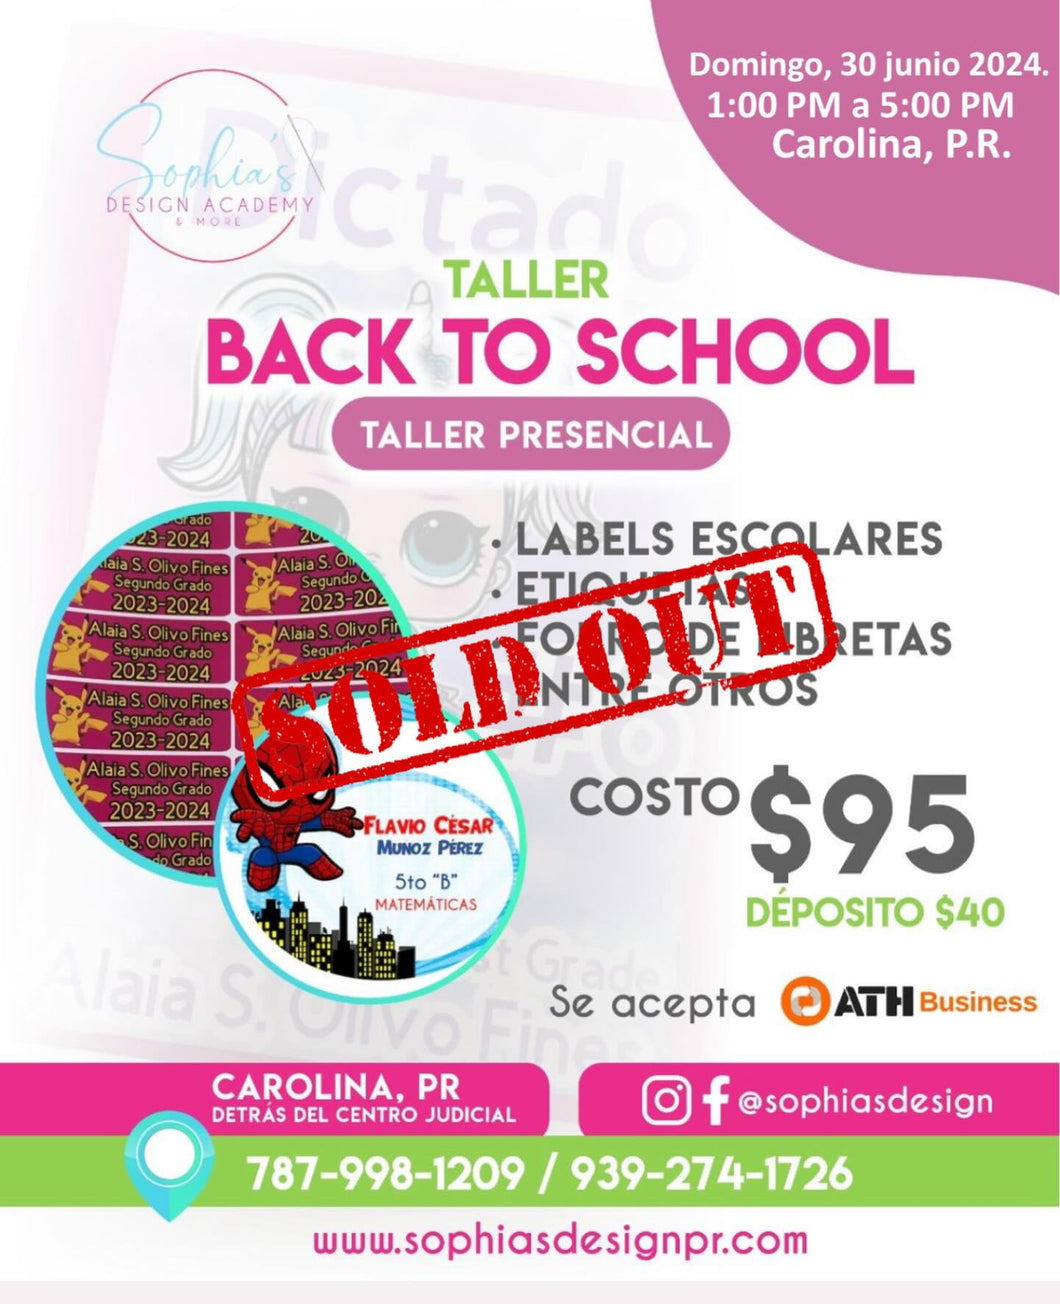 Taller Back to School - Domingo 30 de junio de 2024 (1:00 pm a 5:00 pm)